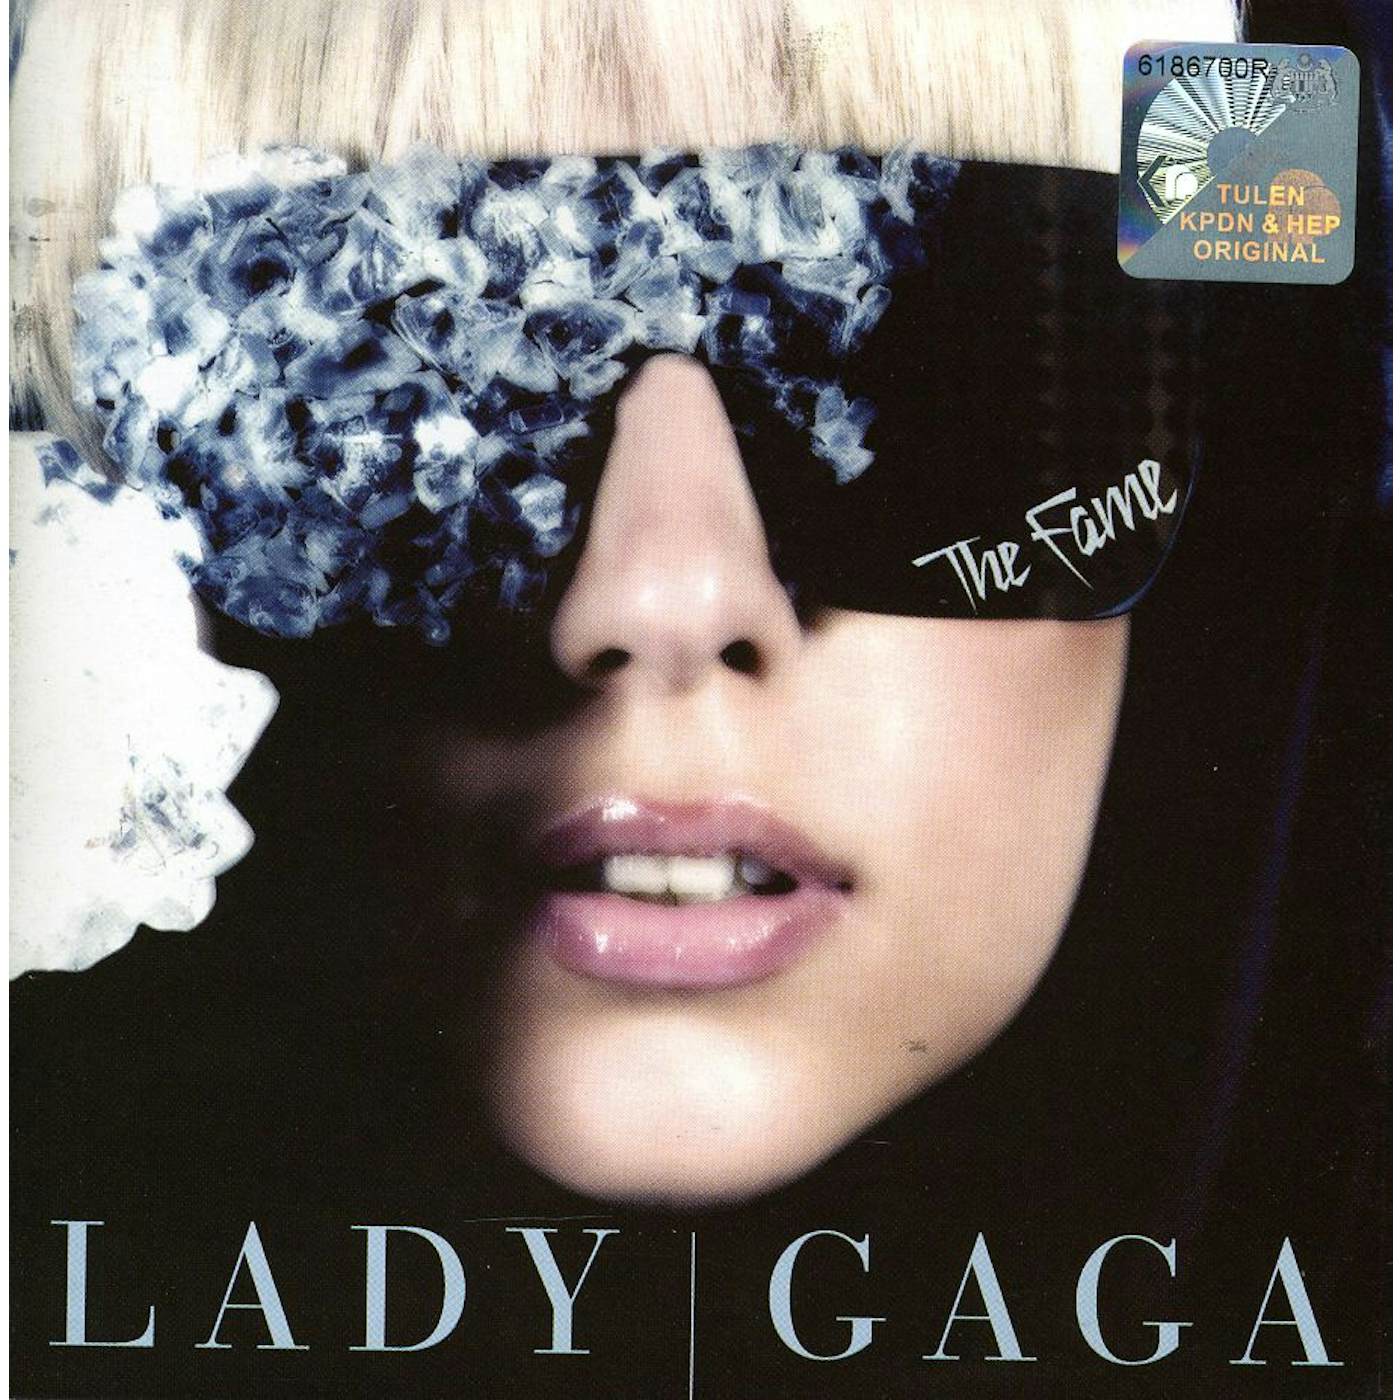 Lady Gaga FAME REVISED INT'L VERSION CD